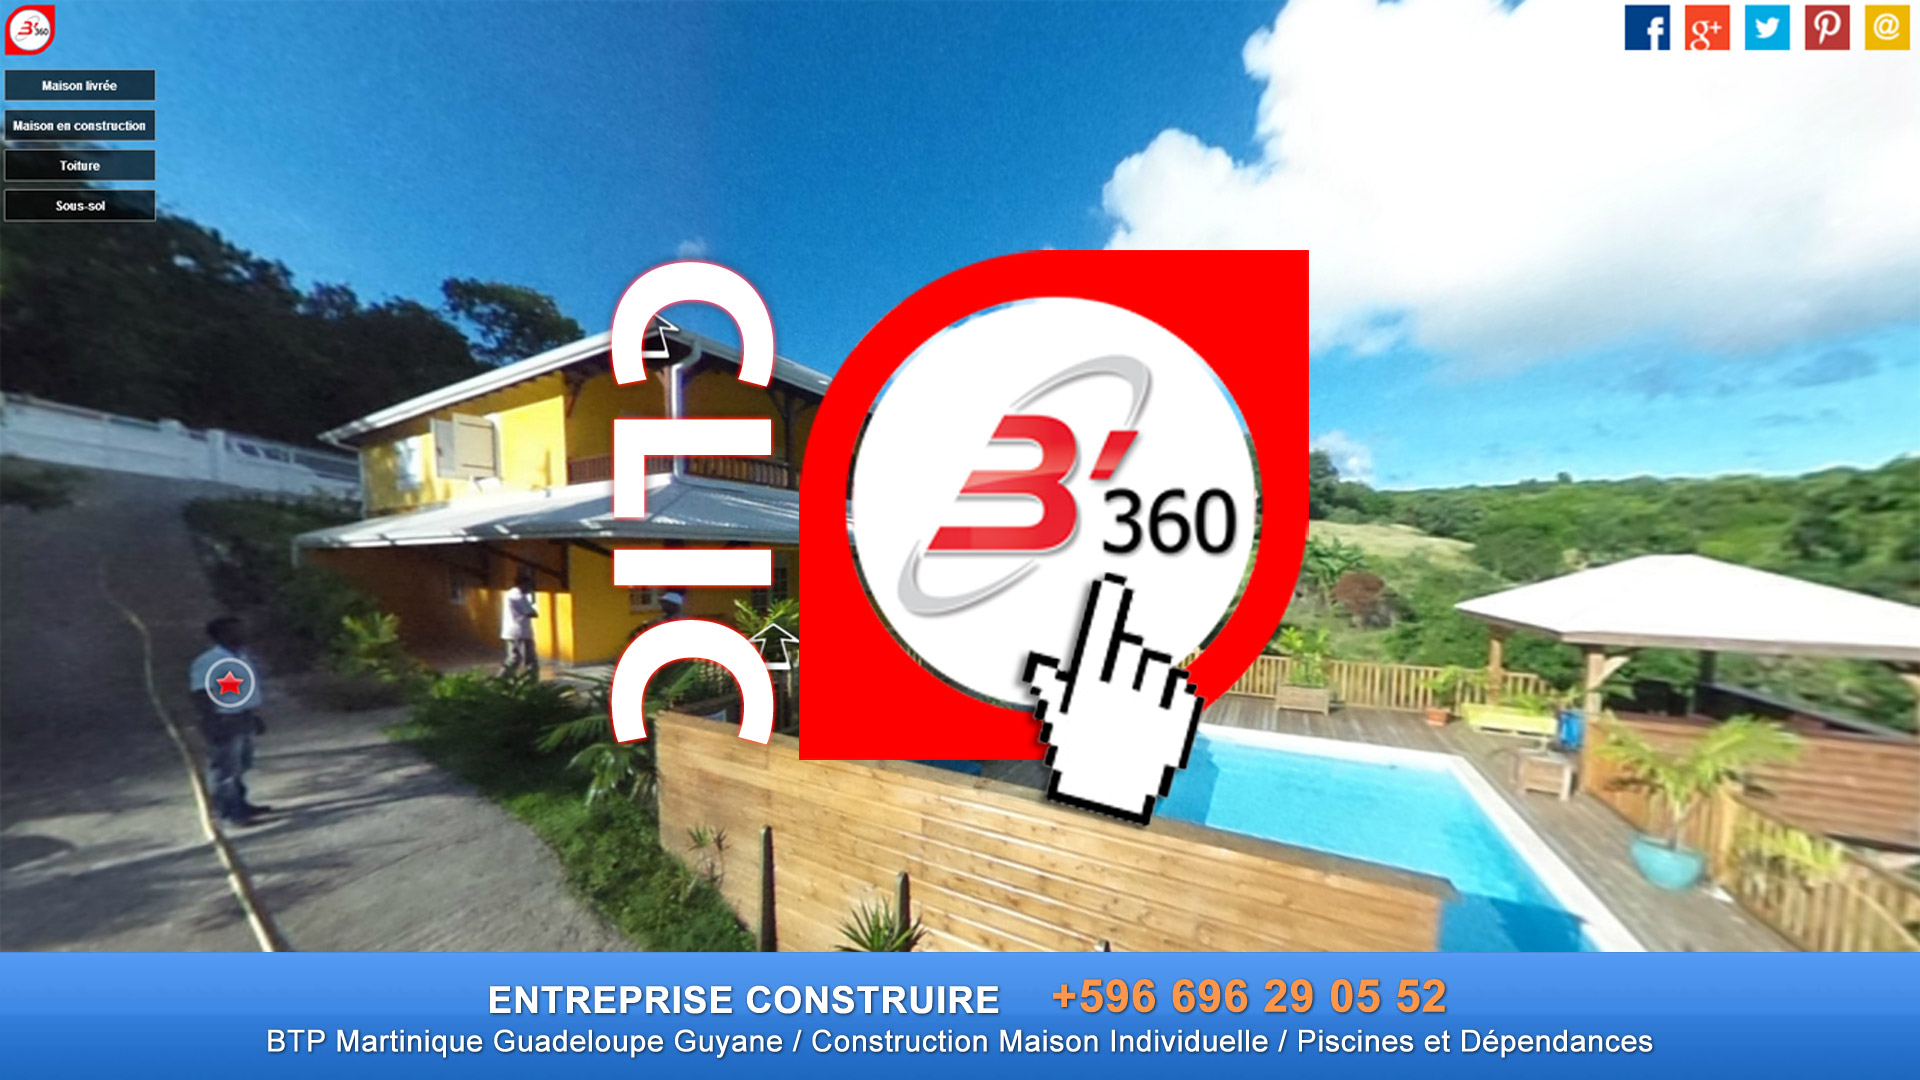 b360-be360-be-360-entreprise-construire-batiment-immobilier-caraibes-guyane-martinique-guadeloupe